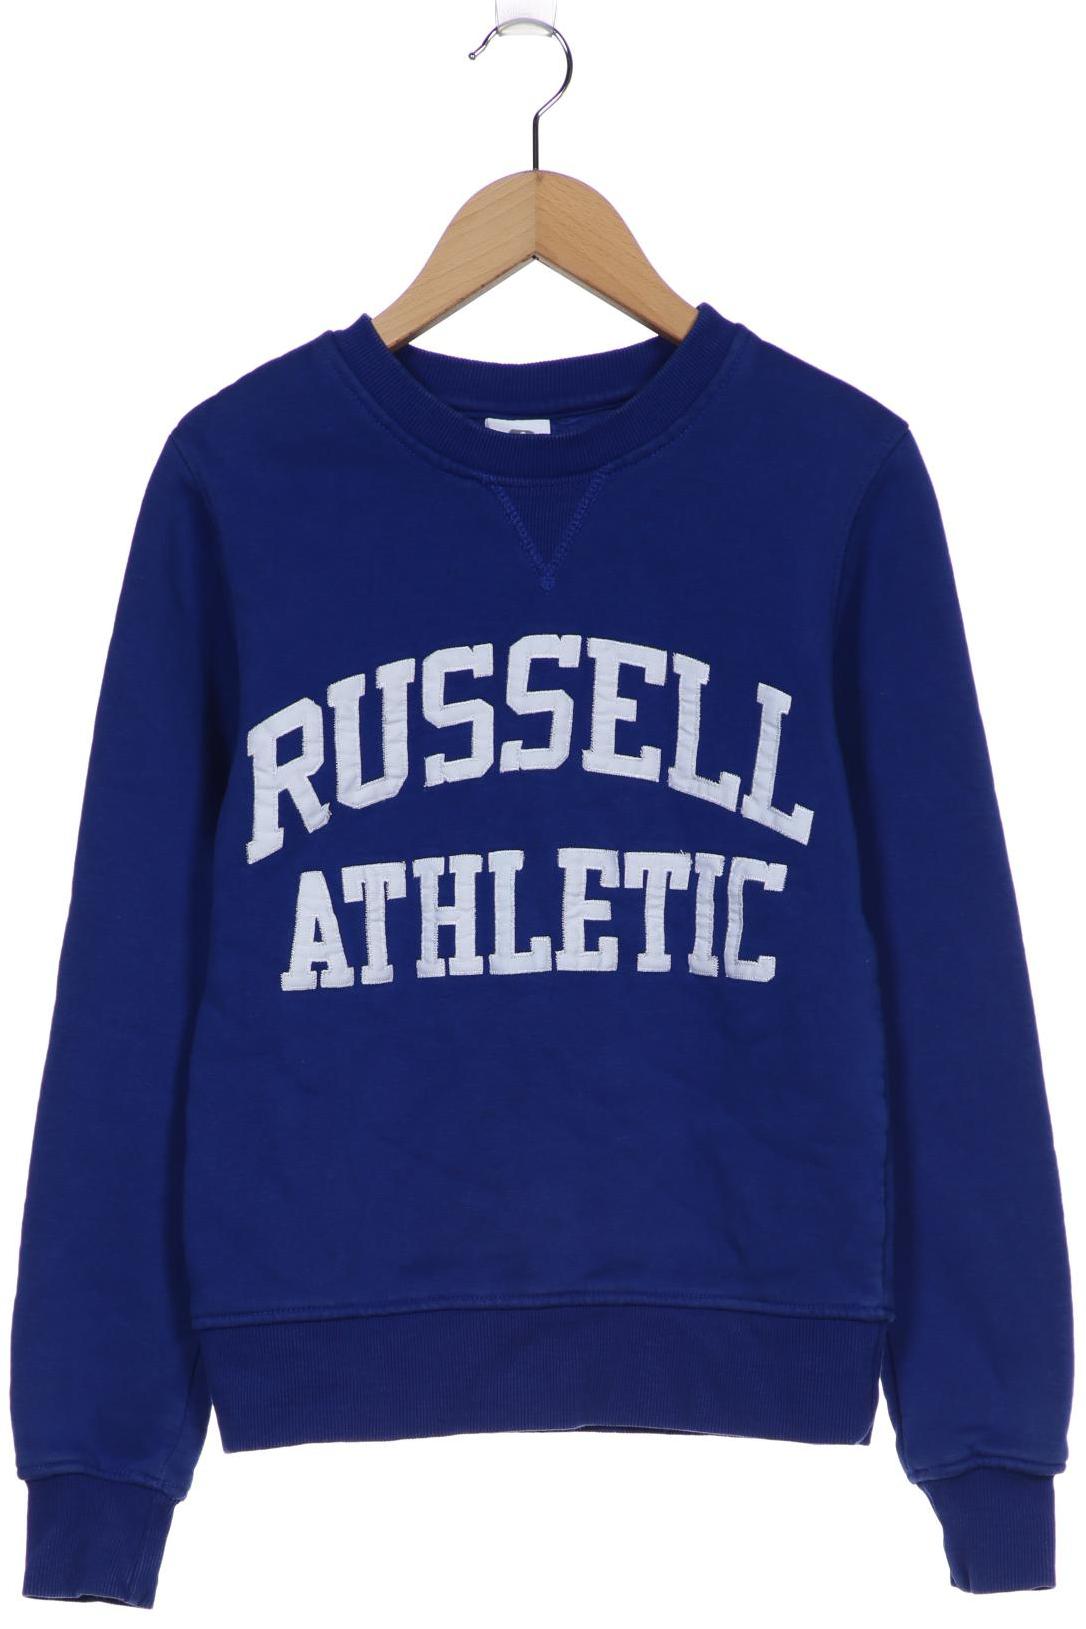 Russell Athletic Damen Sweatshirt, marineblau von Russell Athletic